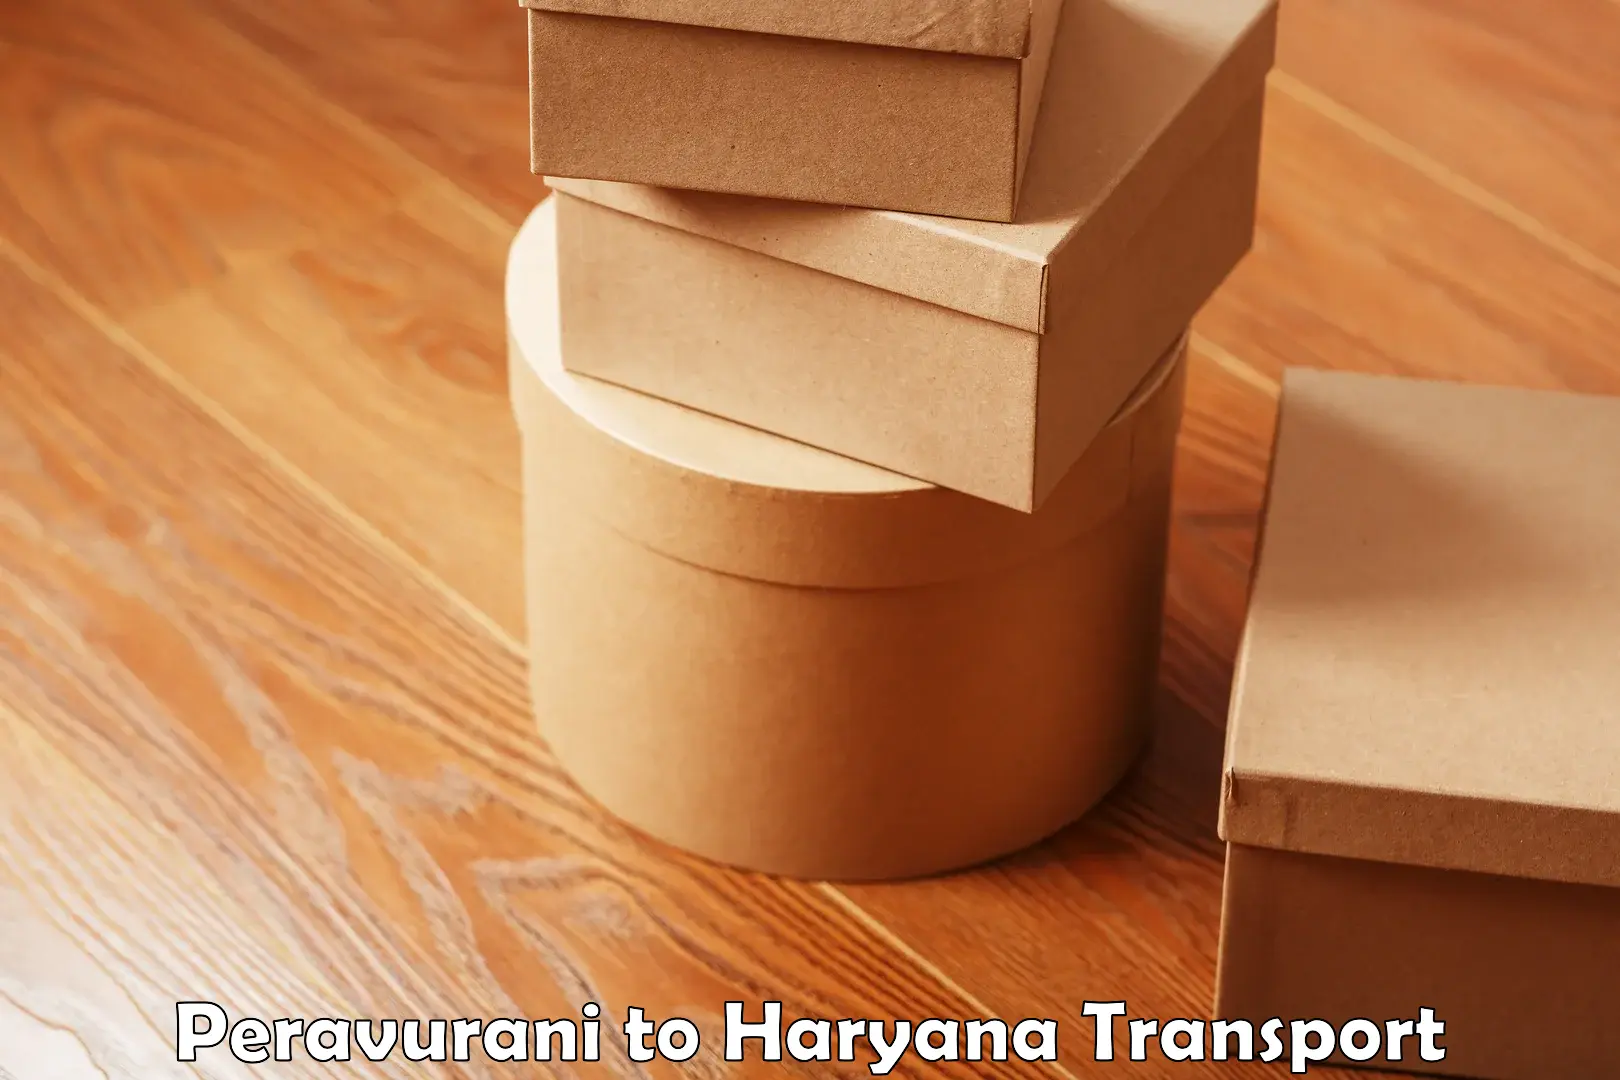 Transport in sharing Peravurani to Haryana